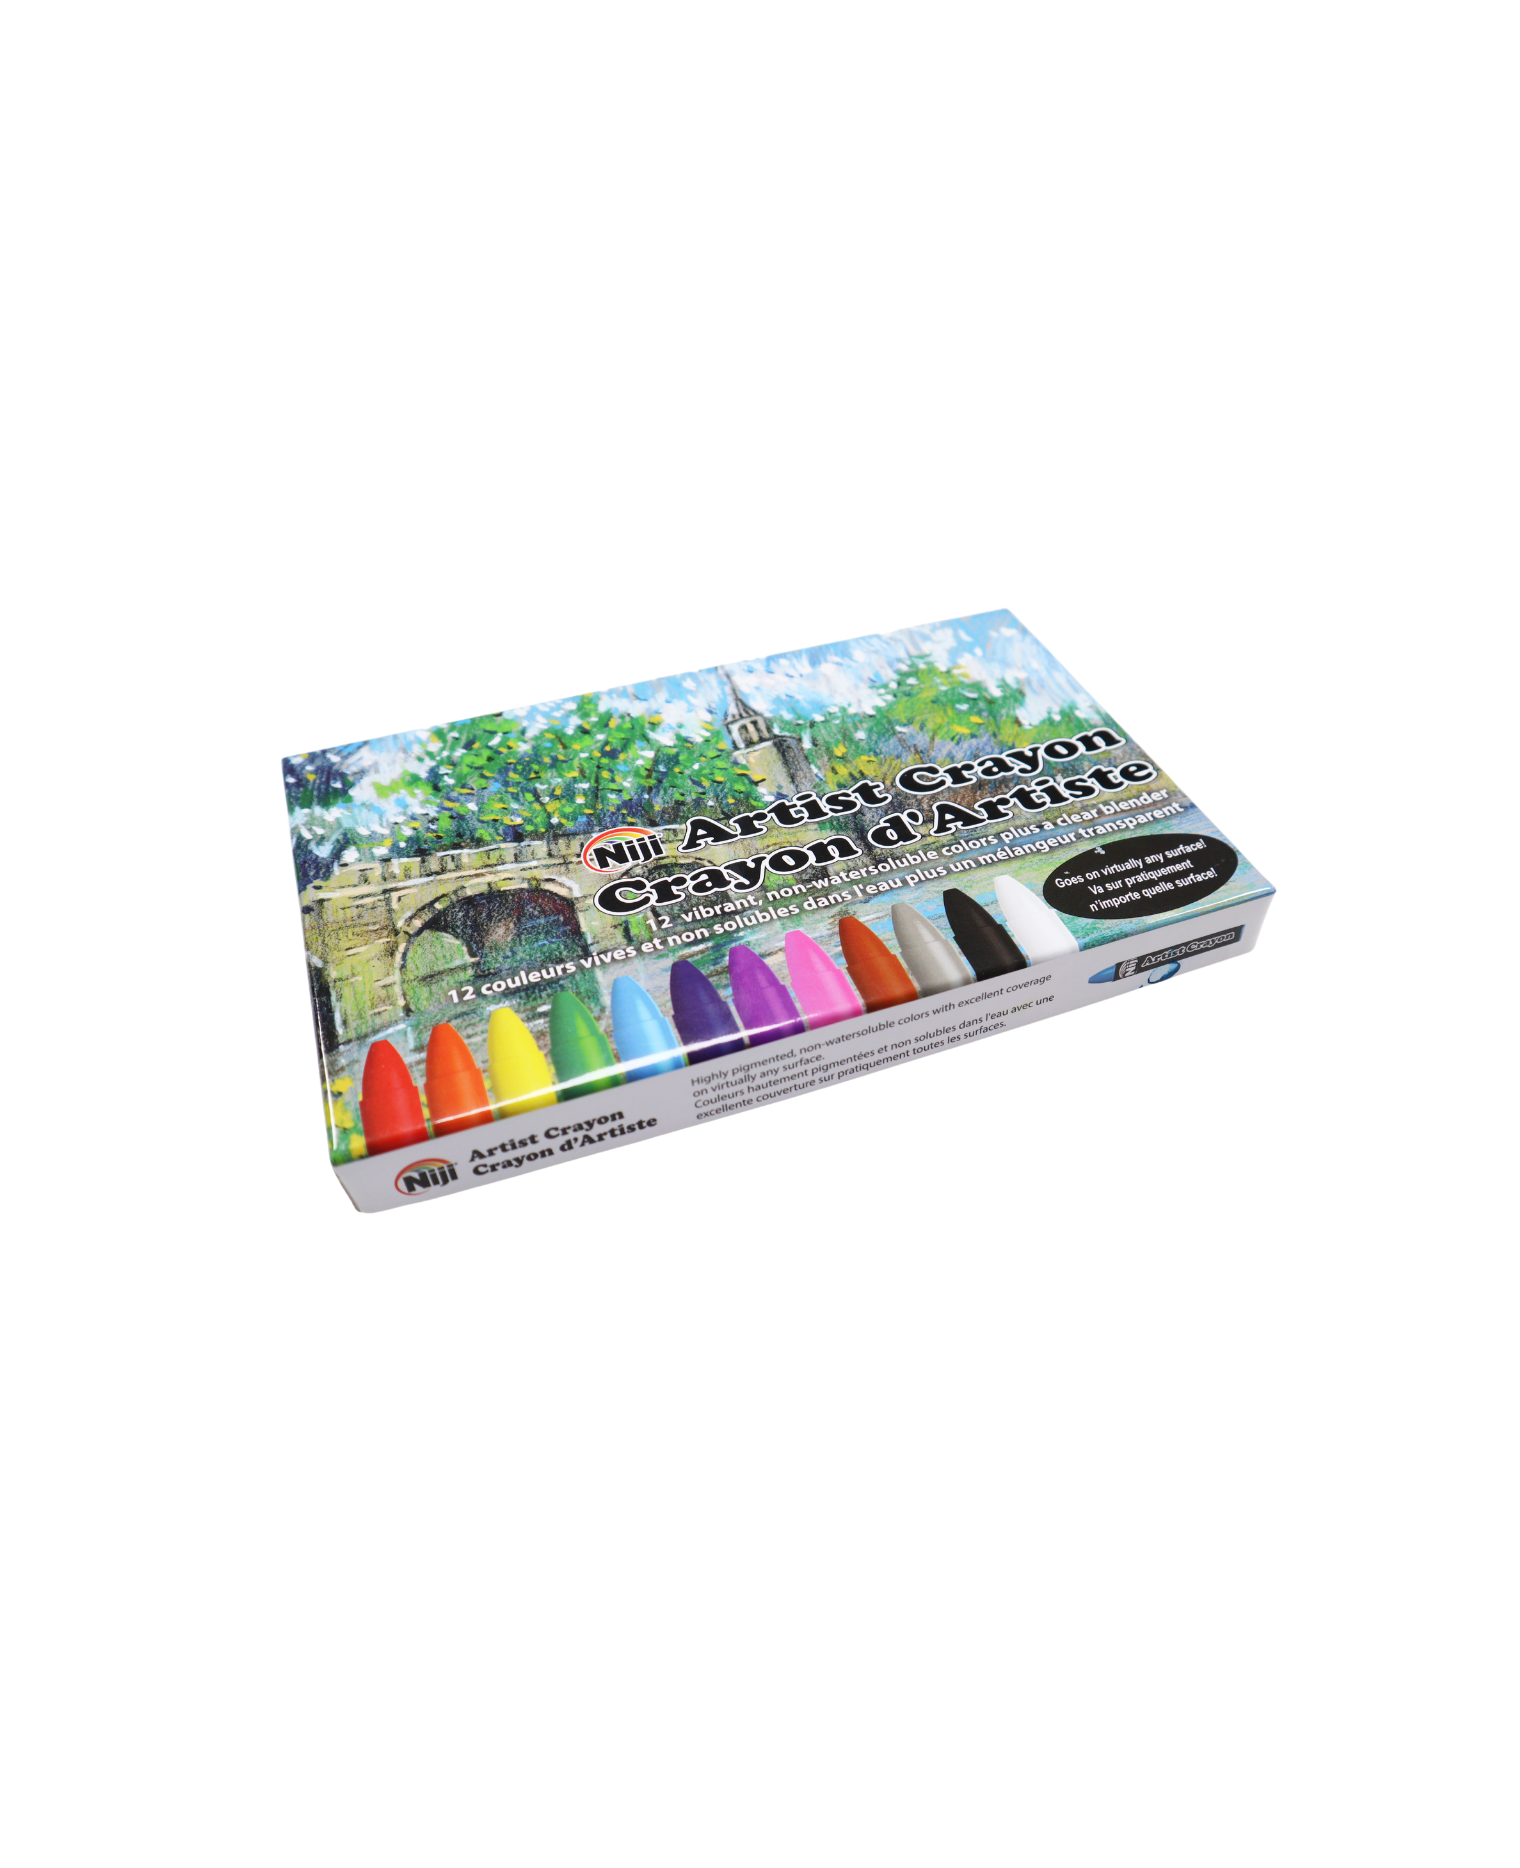 NWS24 – Niji® Artist Watercolors Studio Set, 24 Colors – Yasutomo